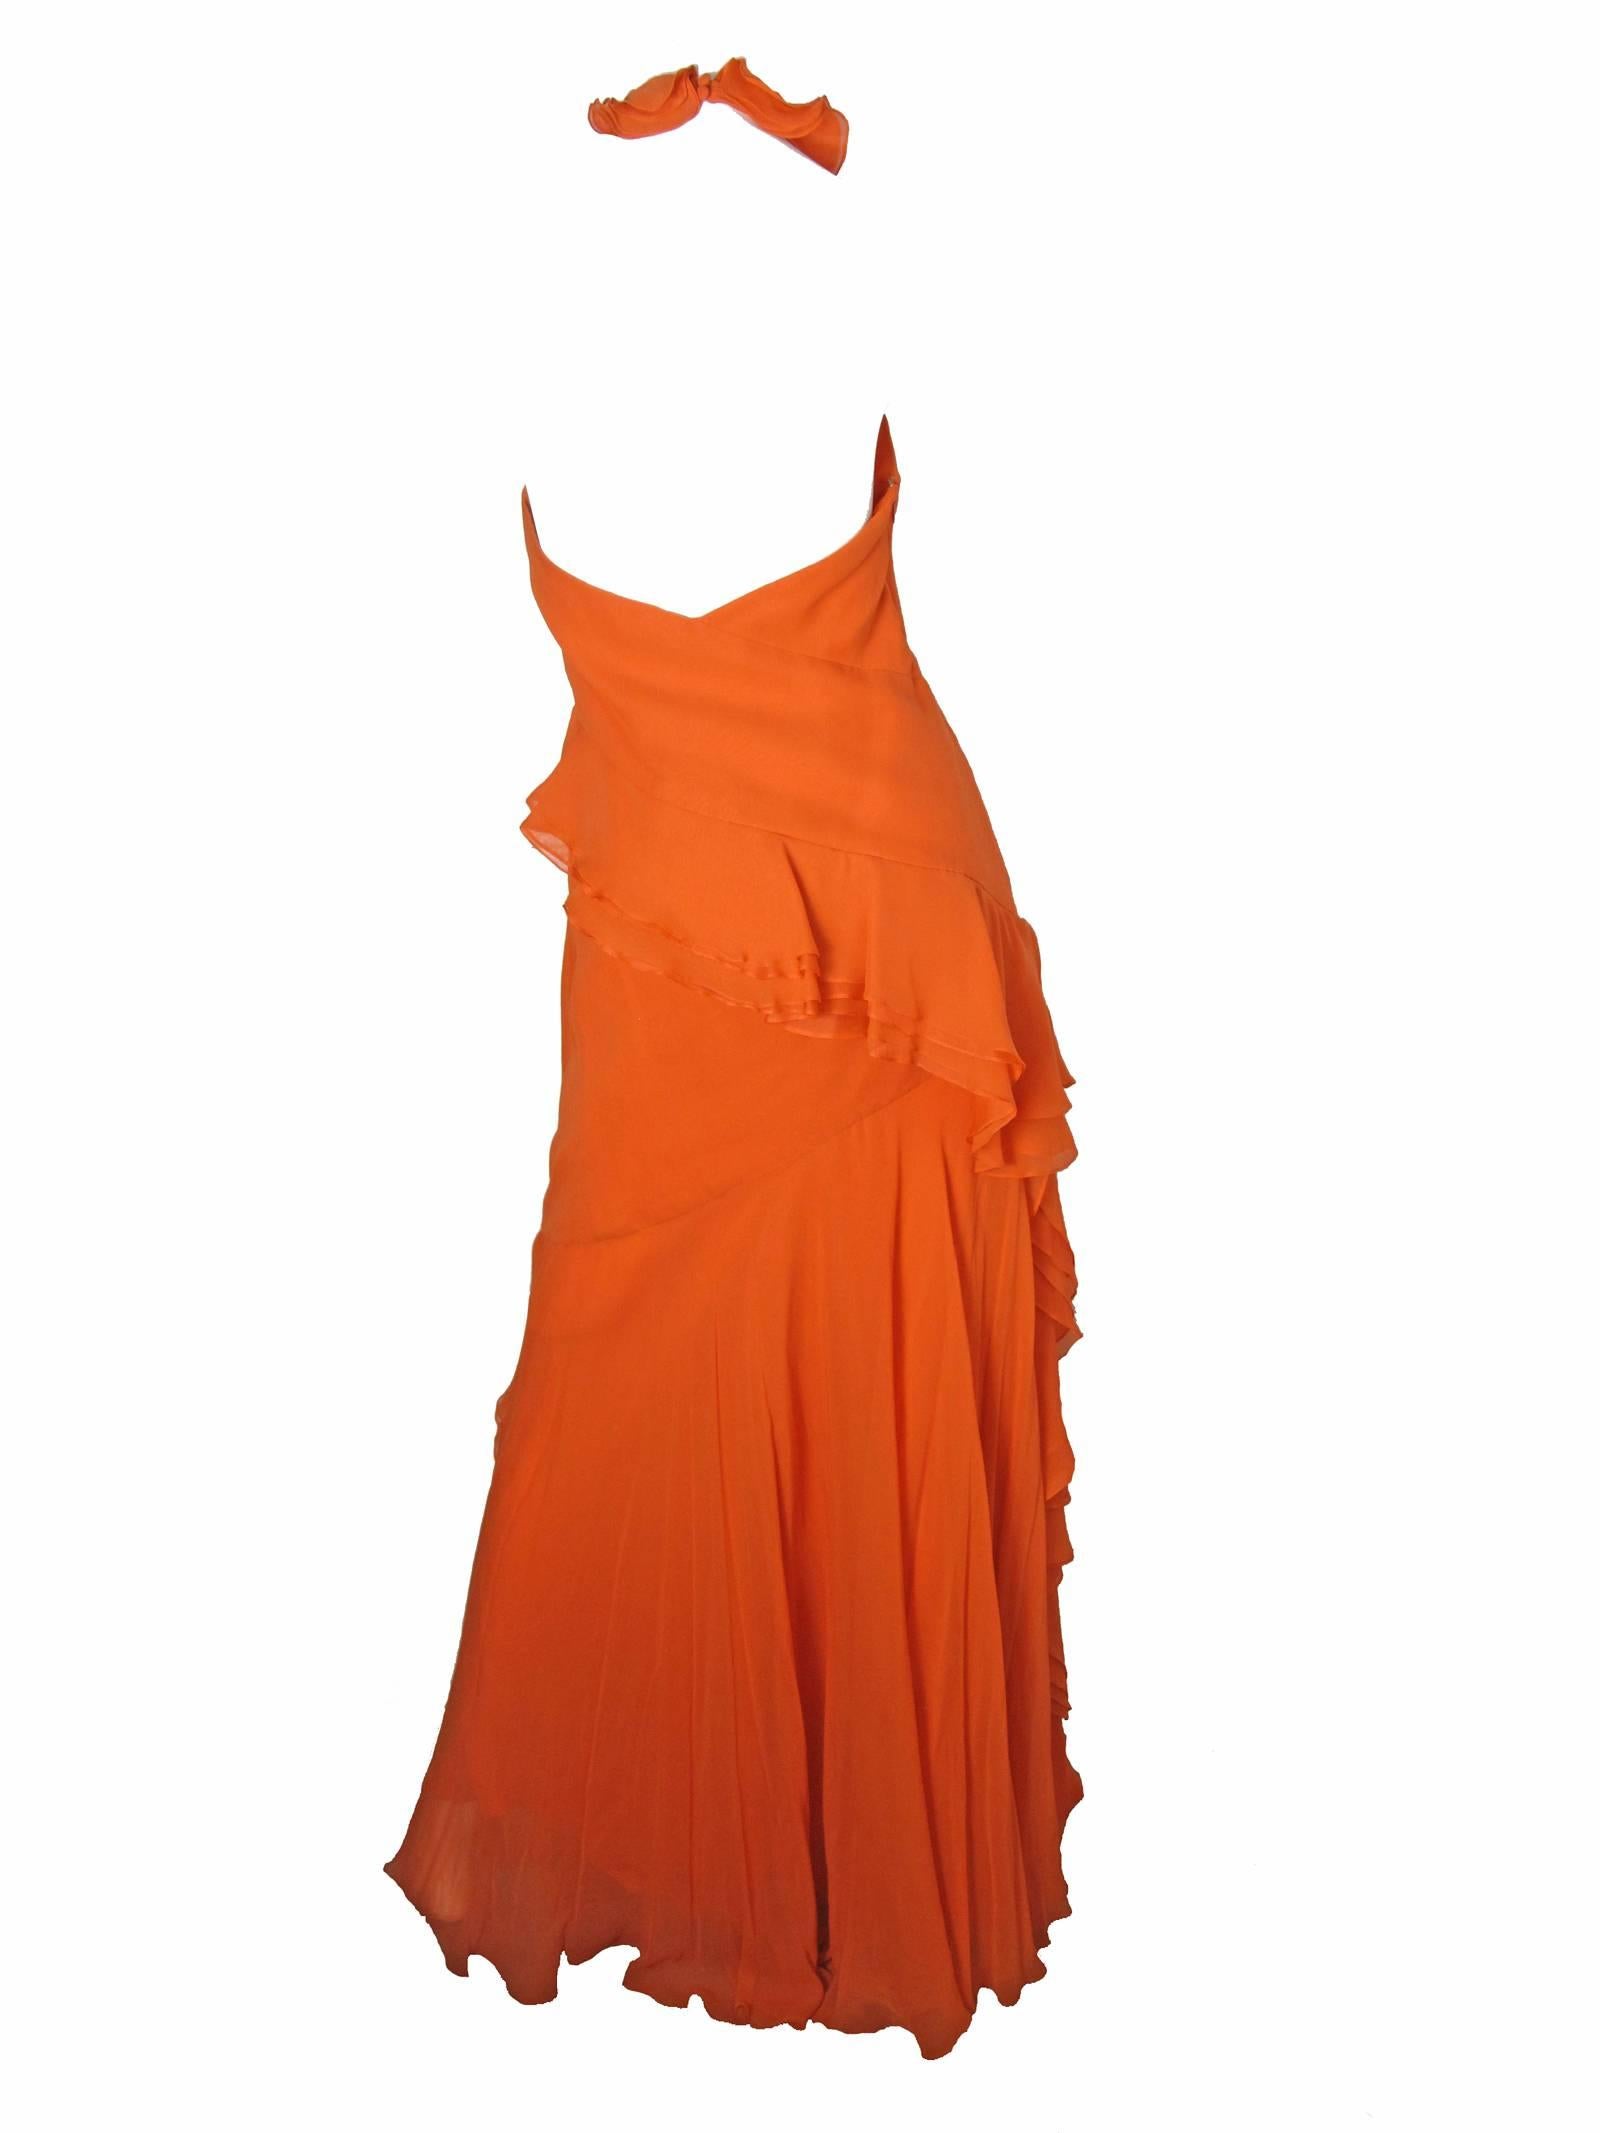 Pamella Roland orange chiffon ruffled halter gown.  Size 6 ( mannequin is a size 6 ) 

36